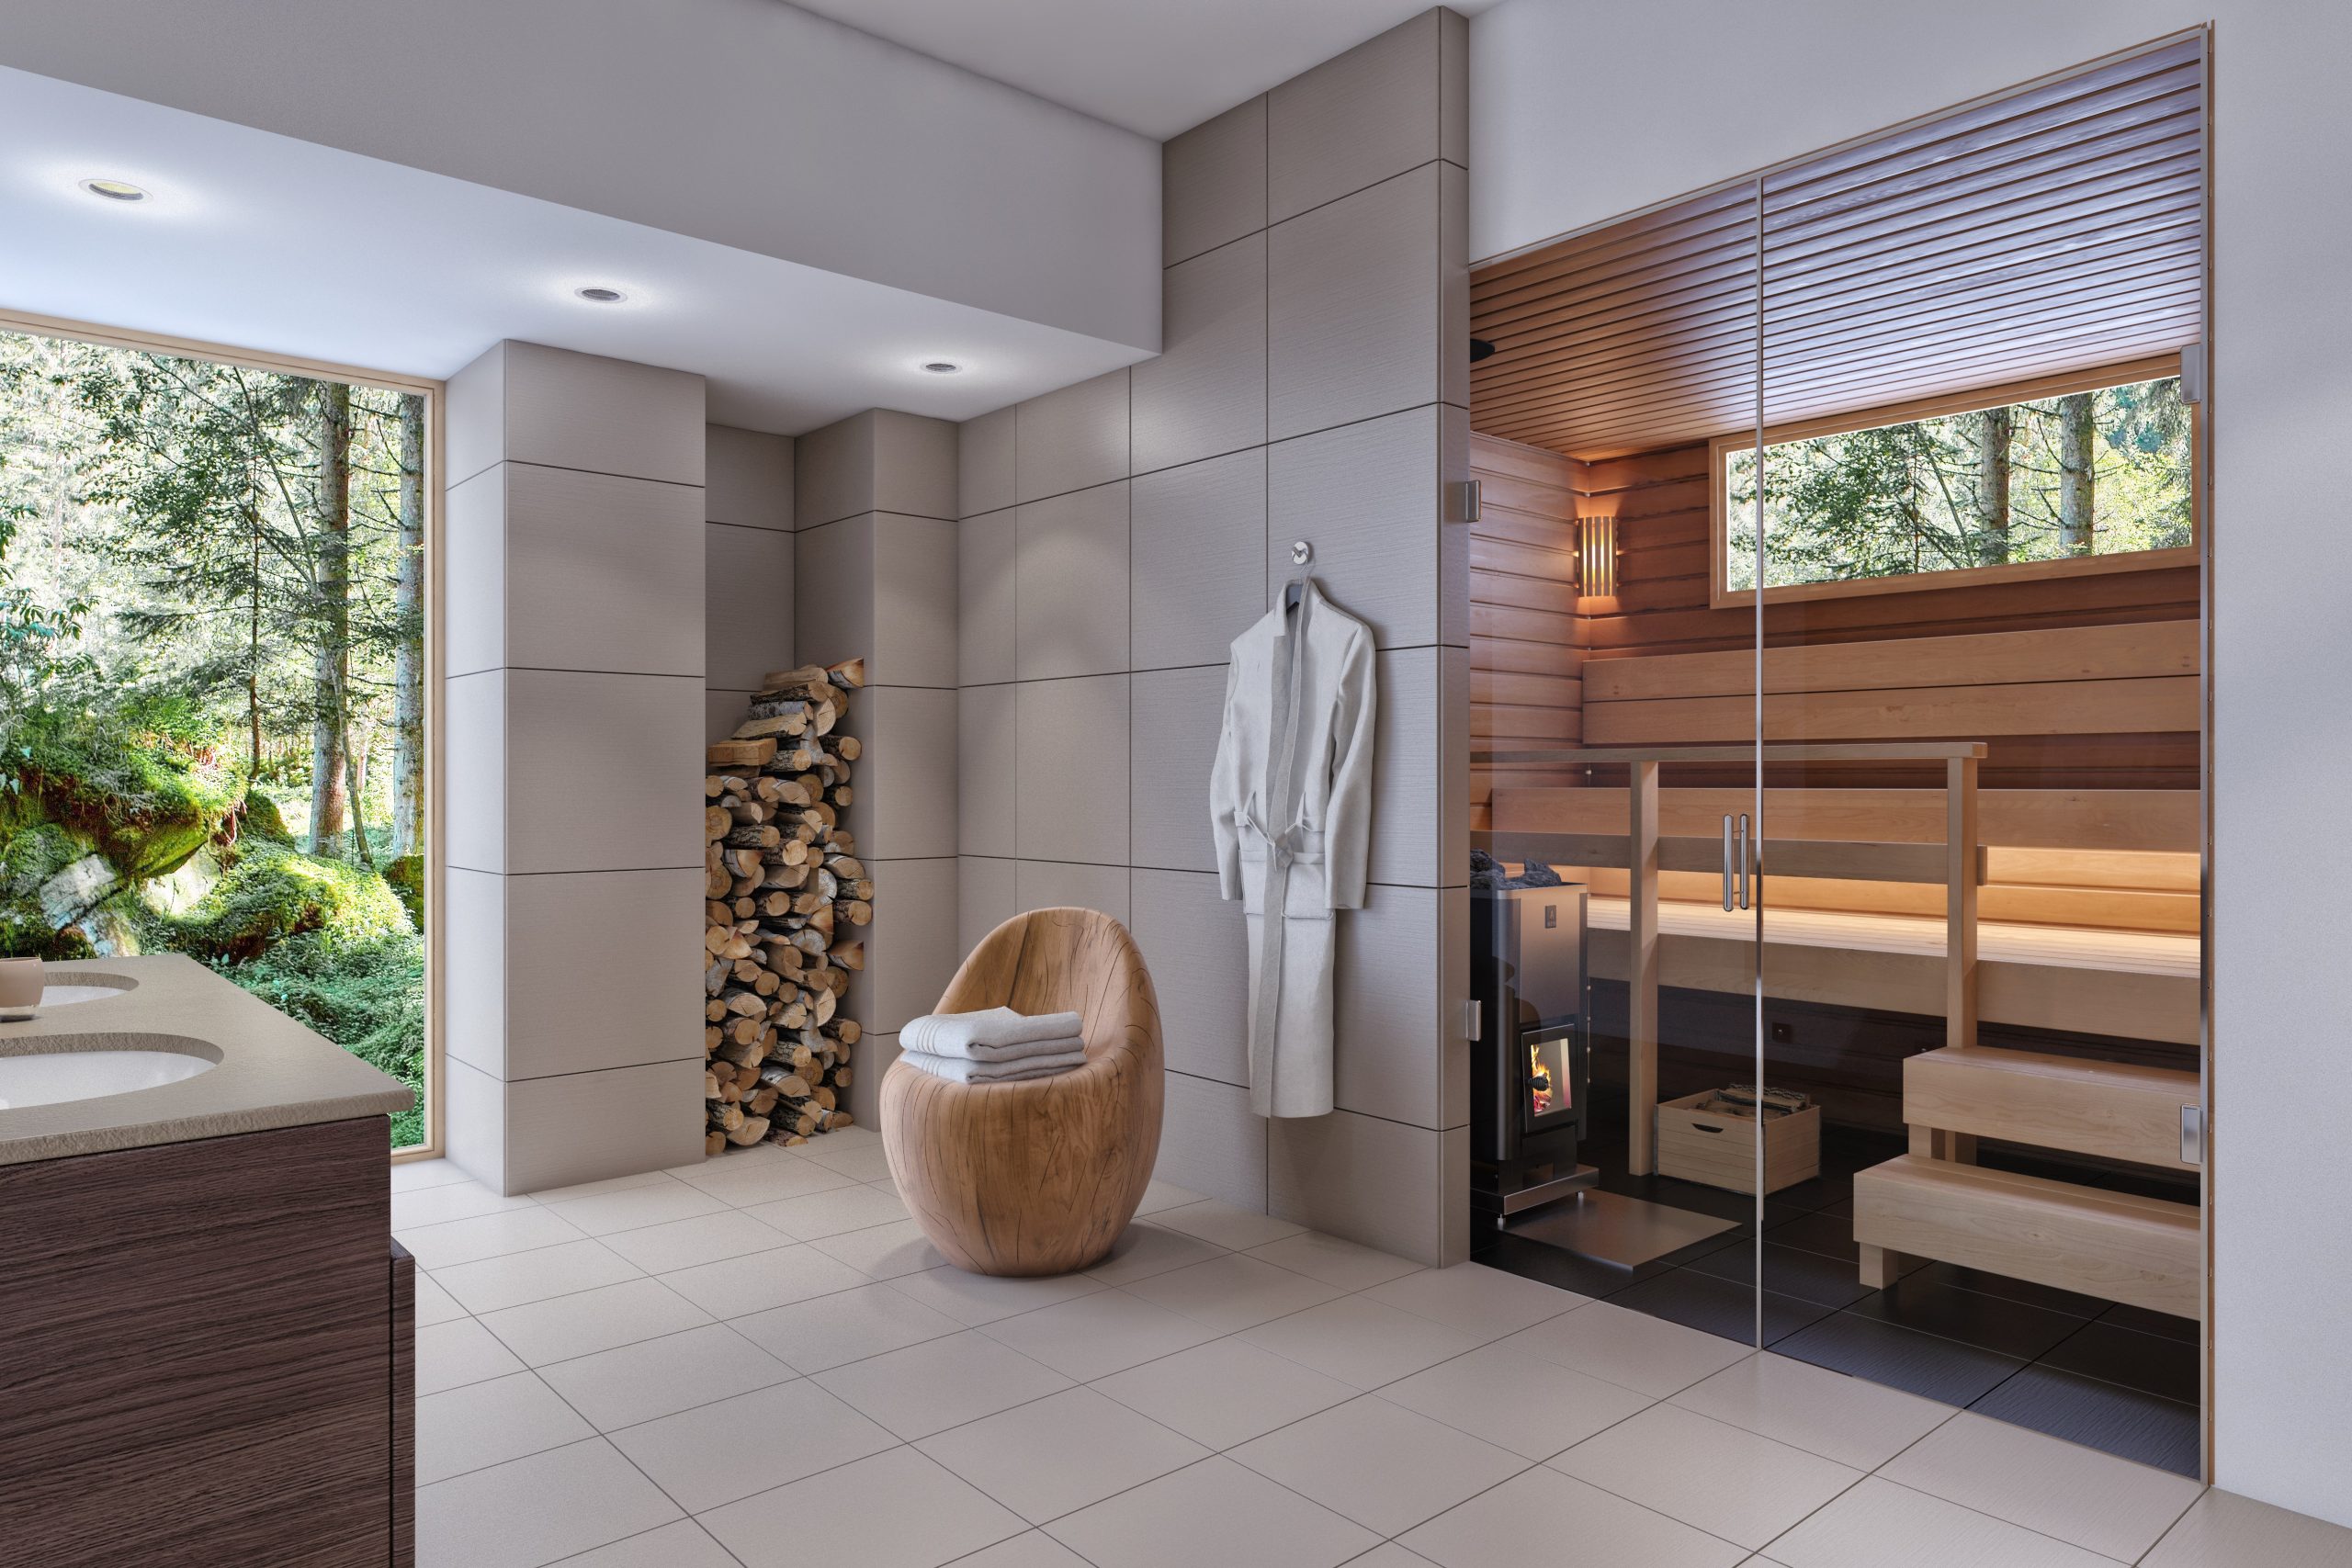 Elevate Your Master Bath With a Sauna - Oregon Hot Tub